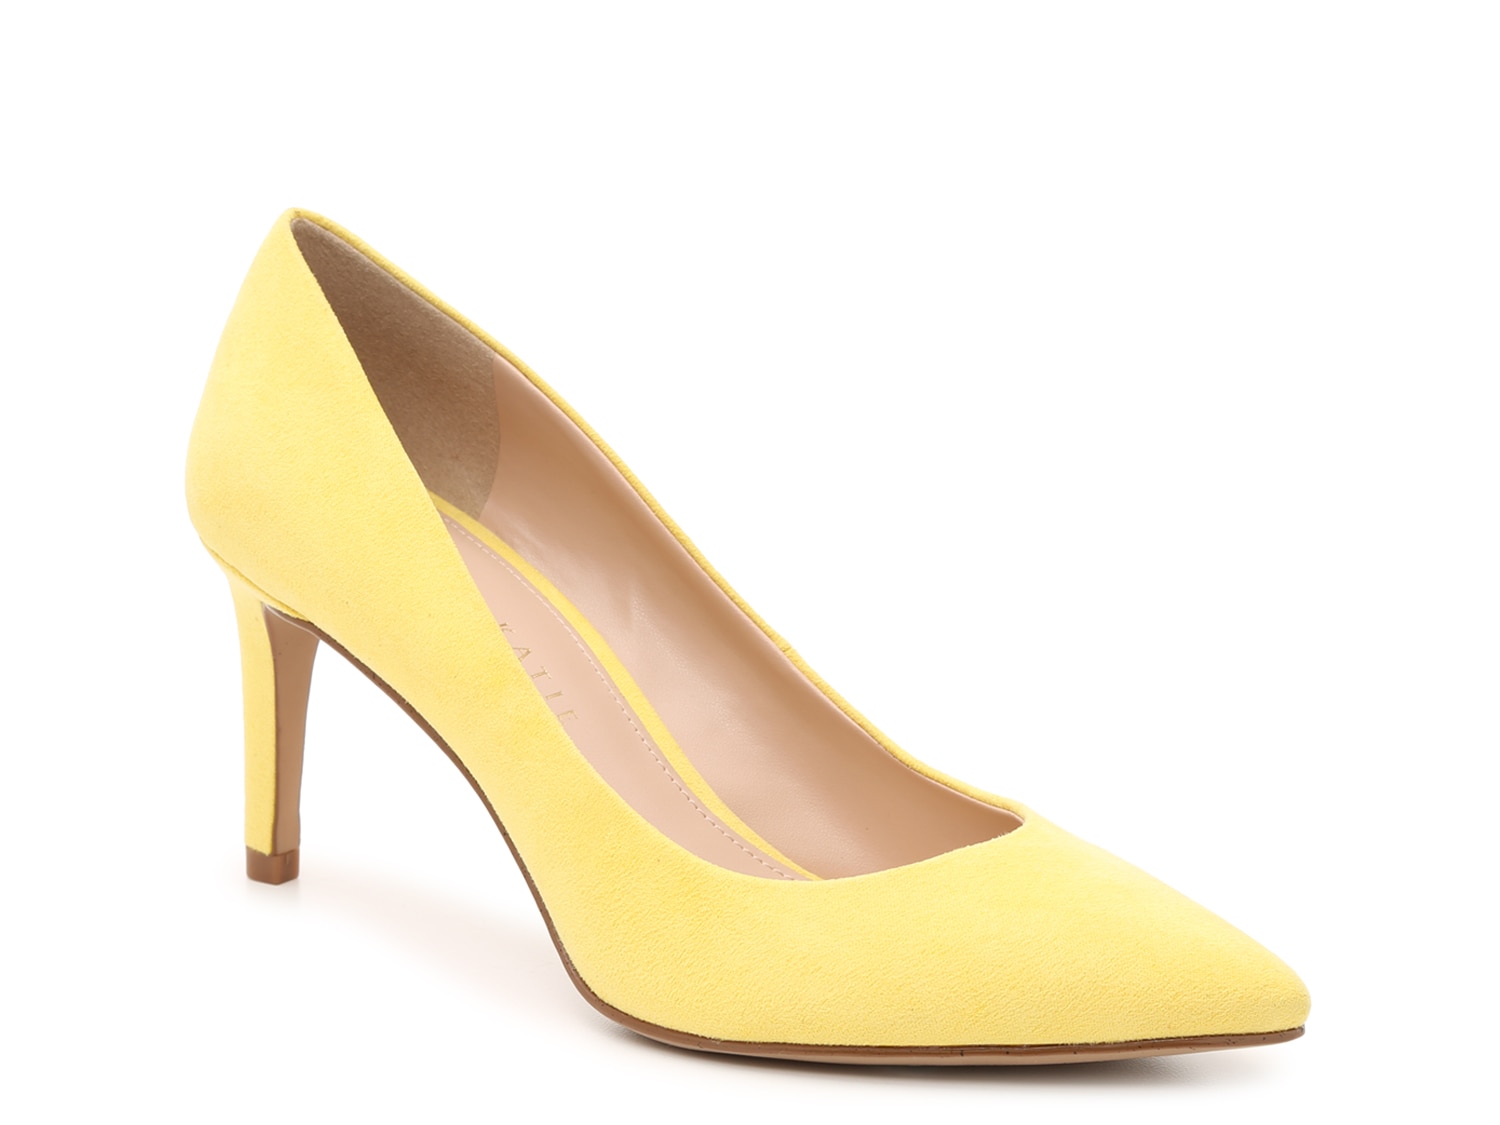 ladies yellow dress shoes